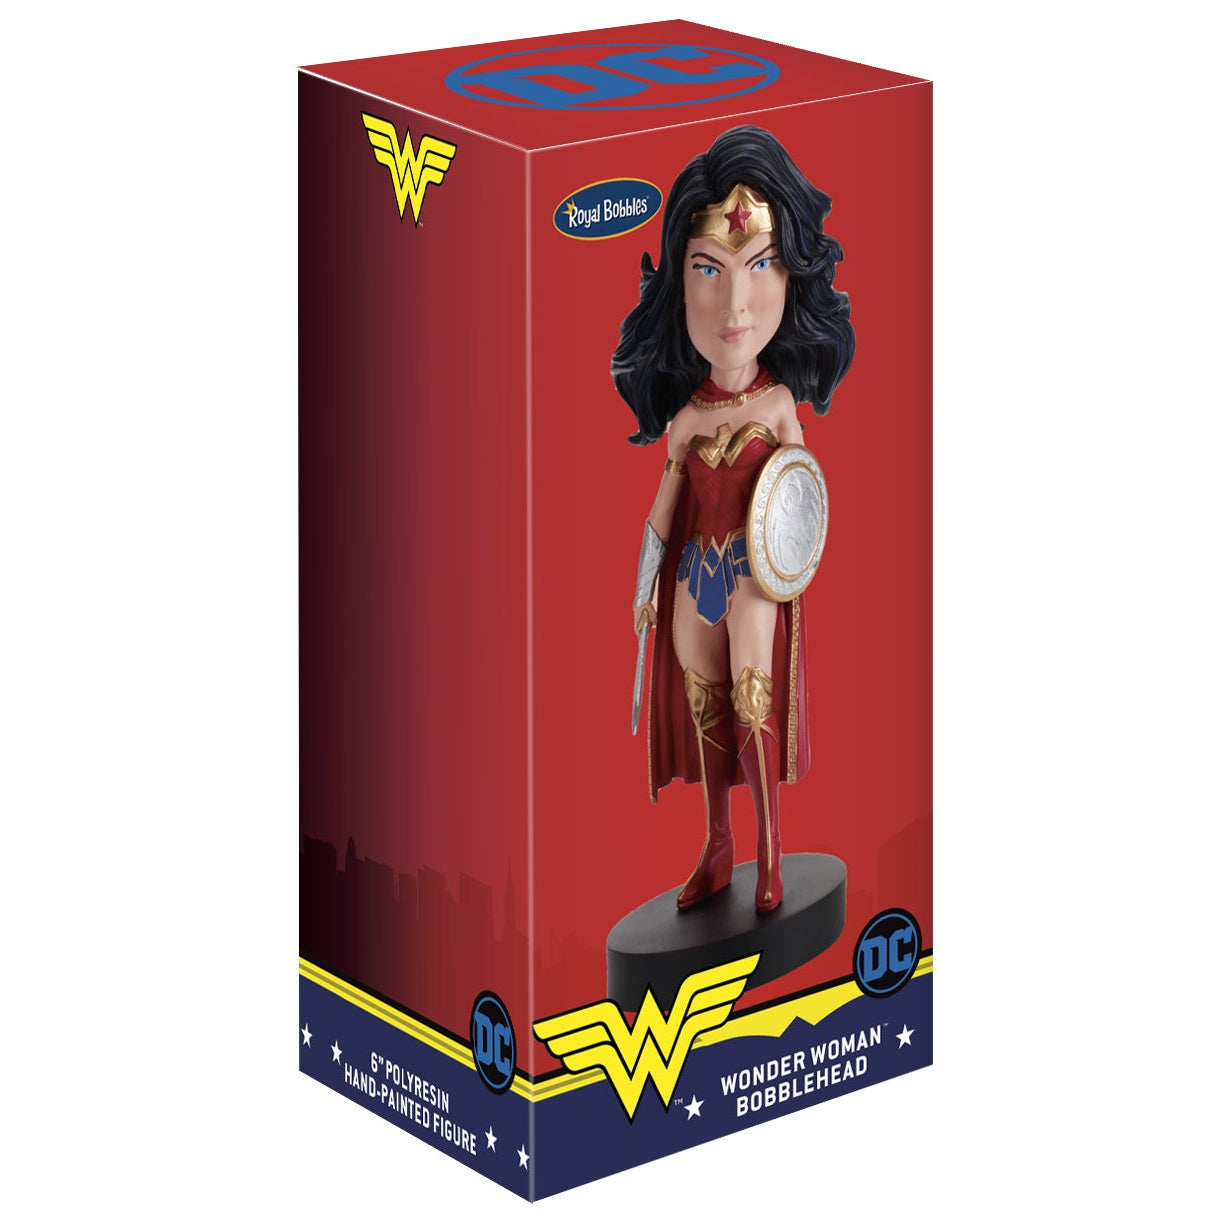 Royal Bobbles Wonder Woman Bobblehead - DC Comics 6″ Series